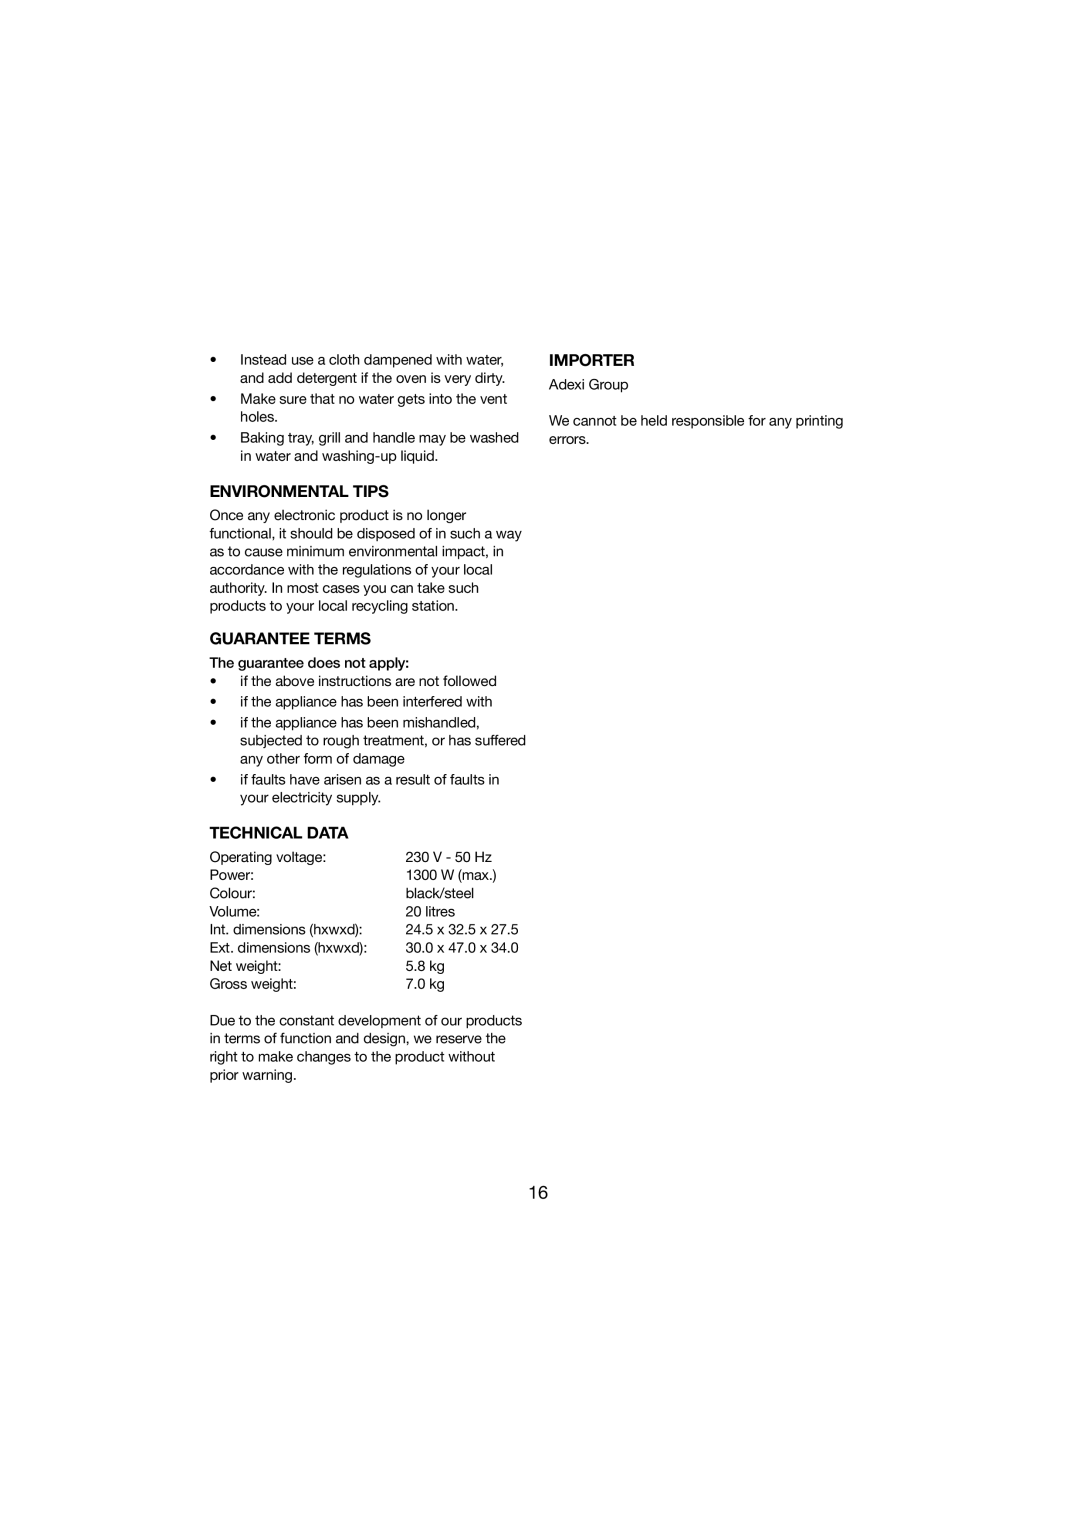 Melissa 251-003 manual Environmental Tips, Guarantee Terms, Technical Data, Importer 